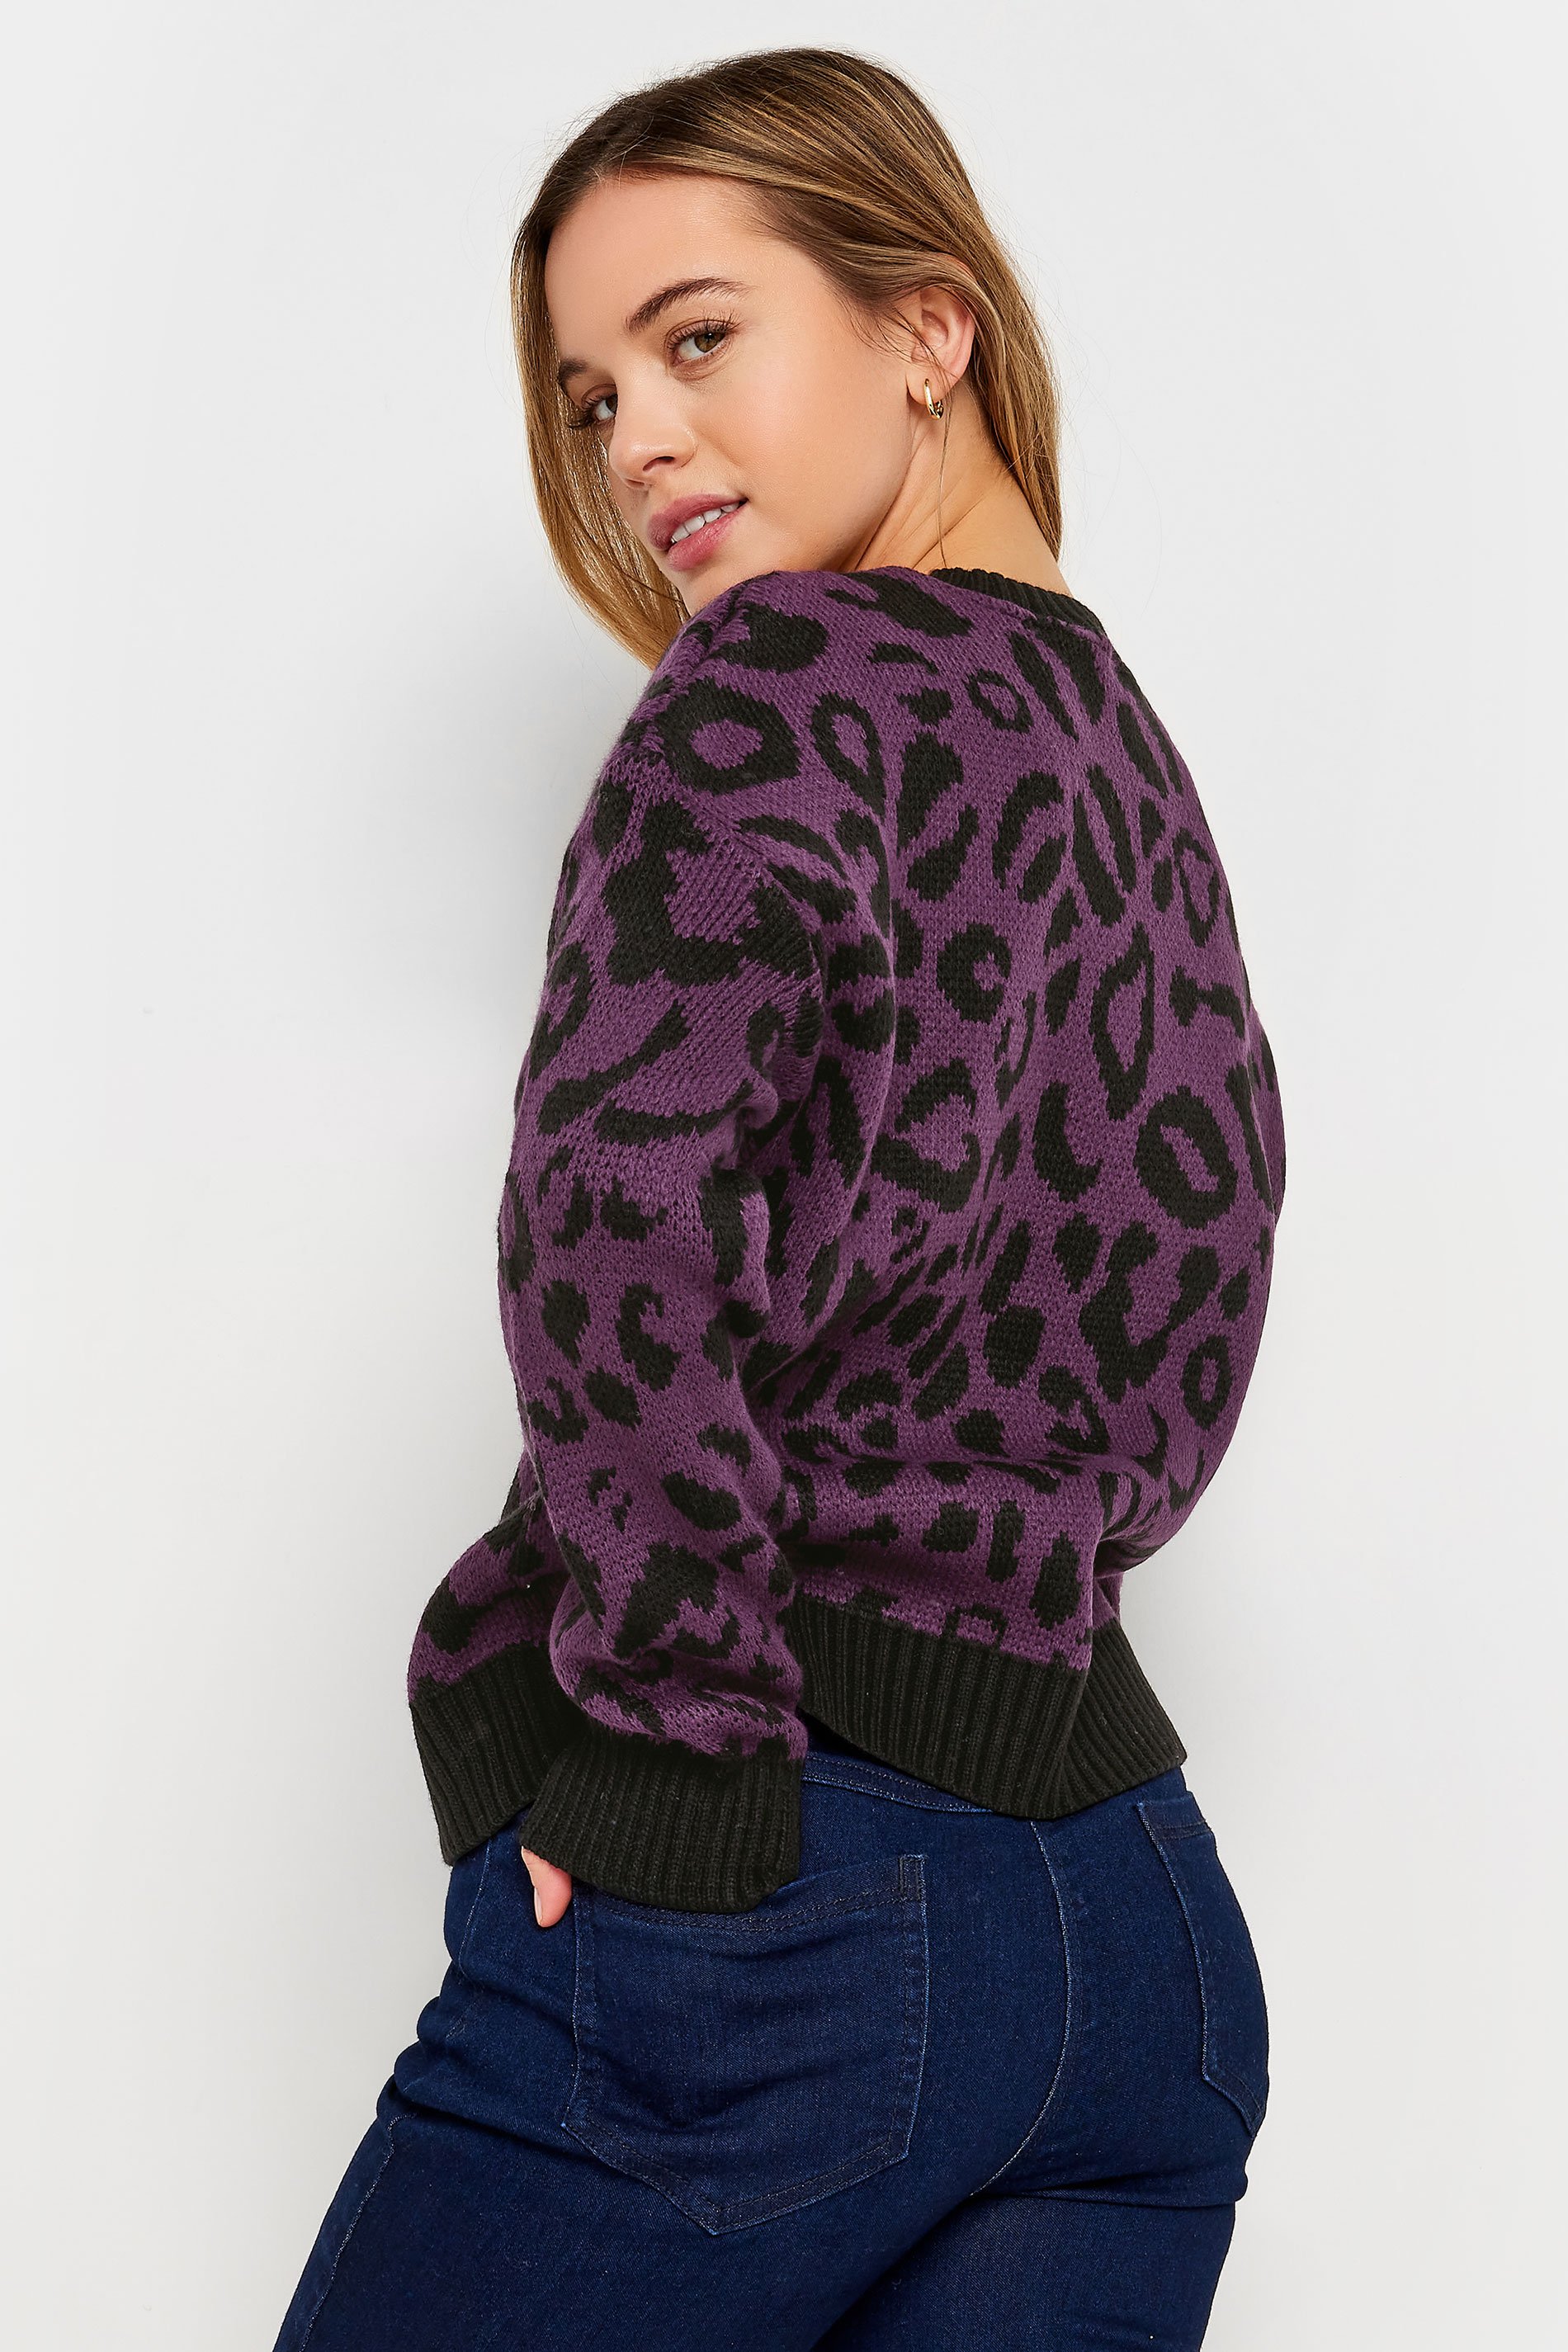 M&Co Petite Purple Leopard Print Jumper | M&Co 3